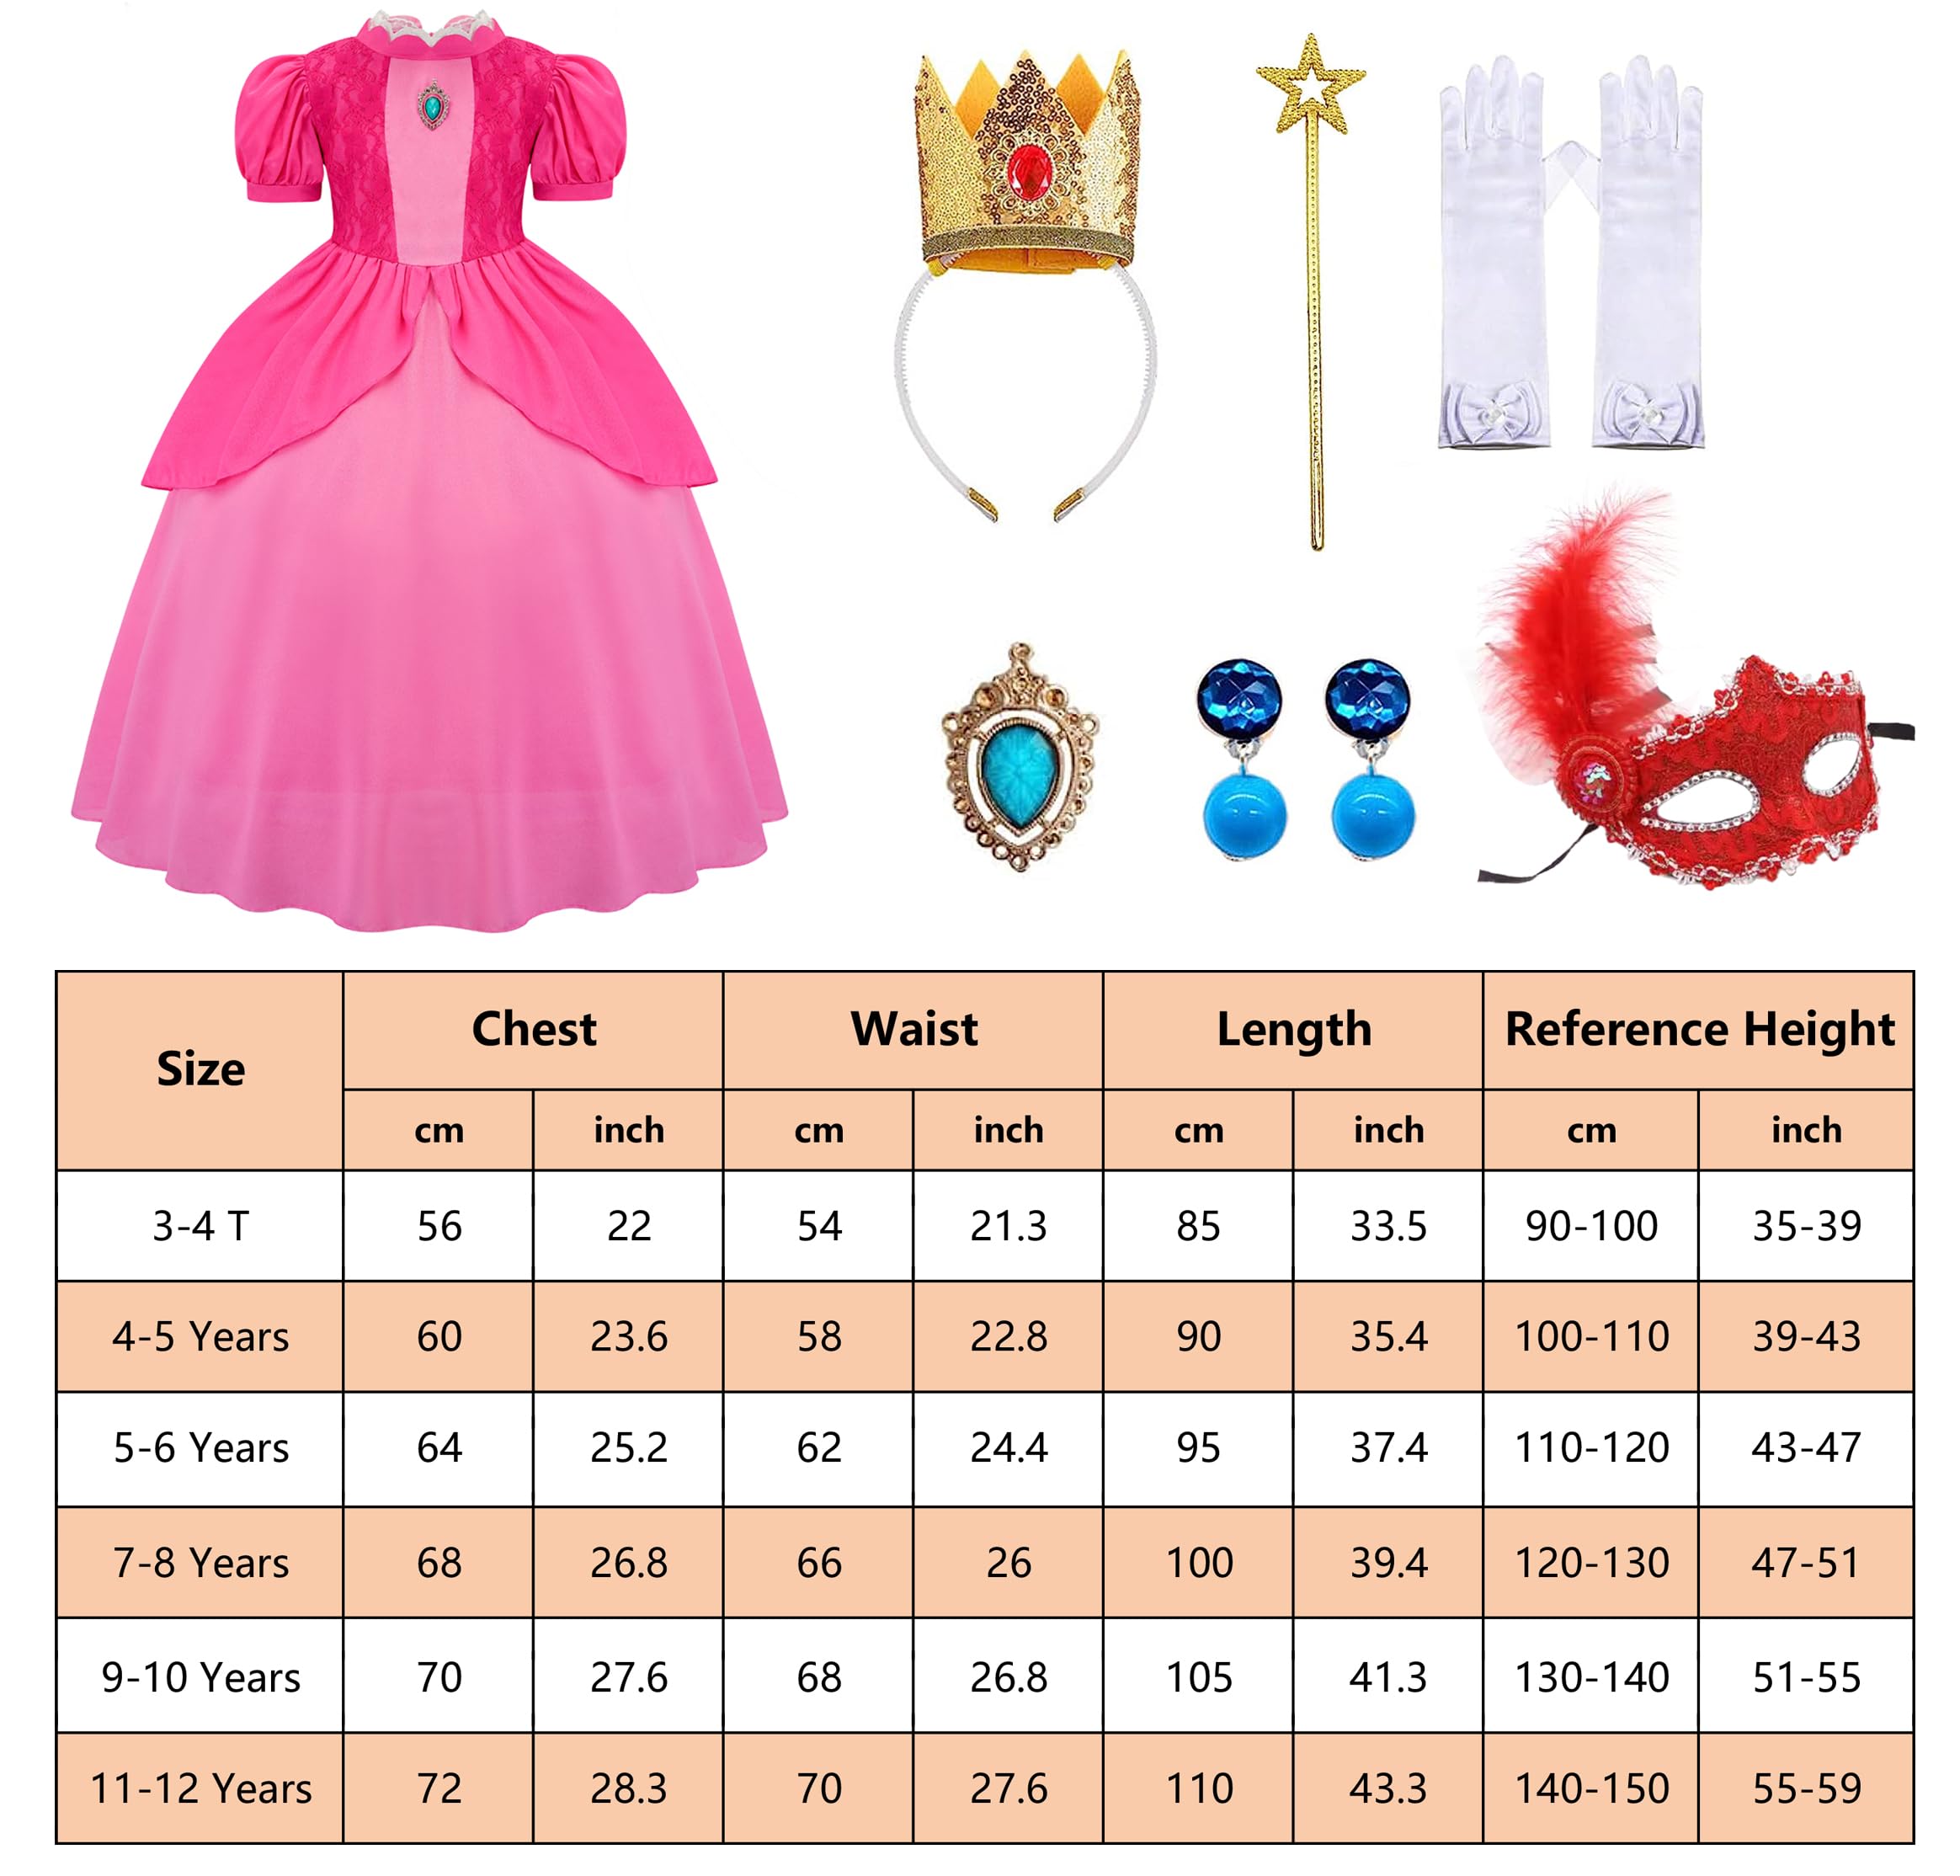 GZ-LAOPAITOU Princess Peach Costume for Girls Princess Peach Dress Birthday Dress Up Cosplay 3-12Years - image 2 of 5